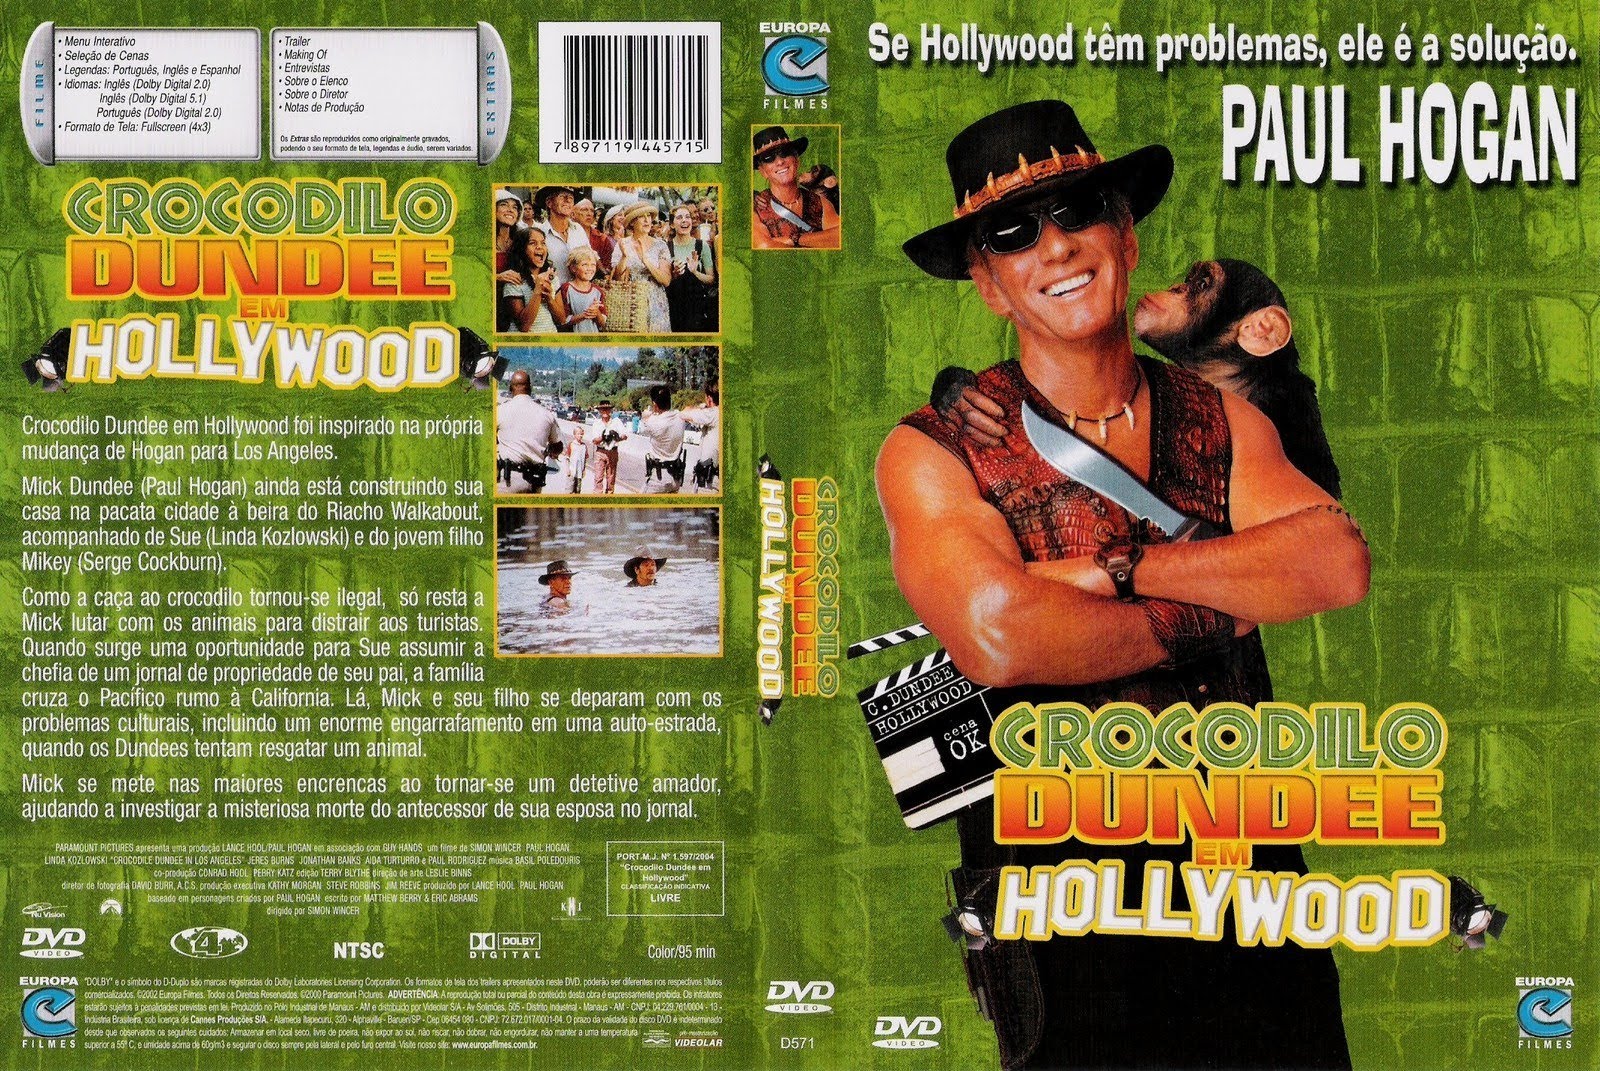 Крокодил данди 1 3. Крокодил Данди (1986) DVD Cover. Крокодил Данди обложка диска. Крокодил Данди в Голливуде. Крокодил Данди DVD.